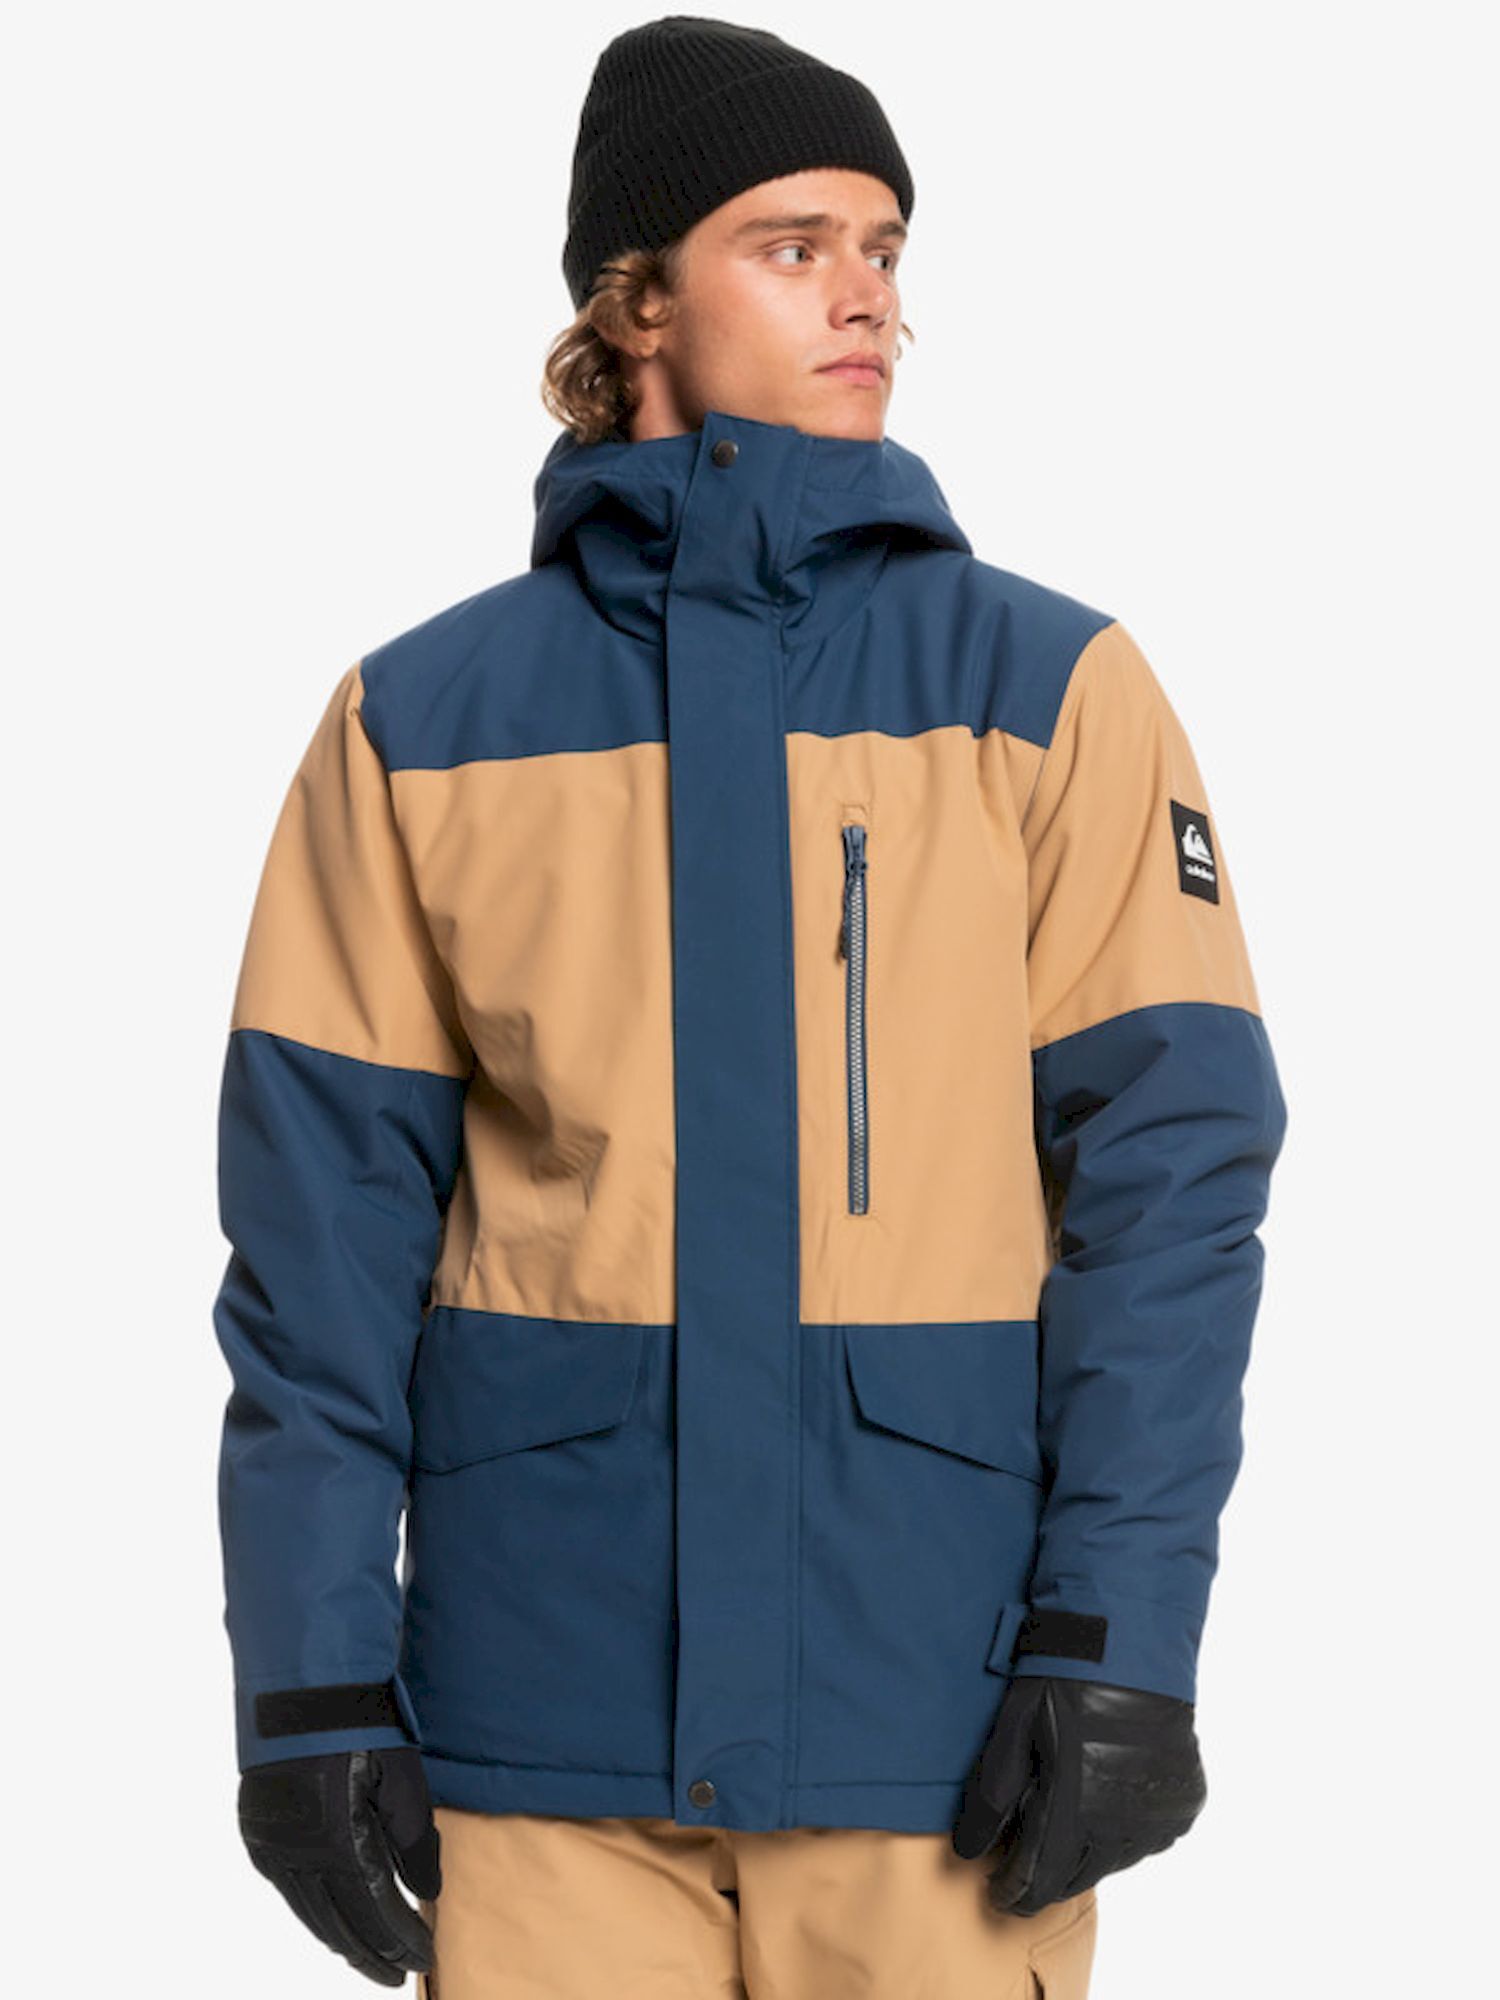 Quiksilver Mission Block Jacket - Chaqueta de esquí - Hombre | Hardloop